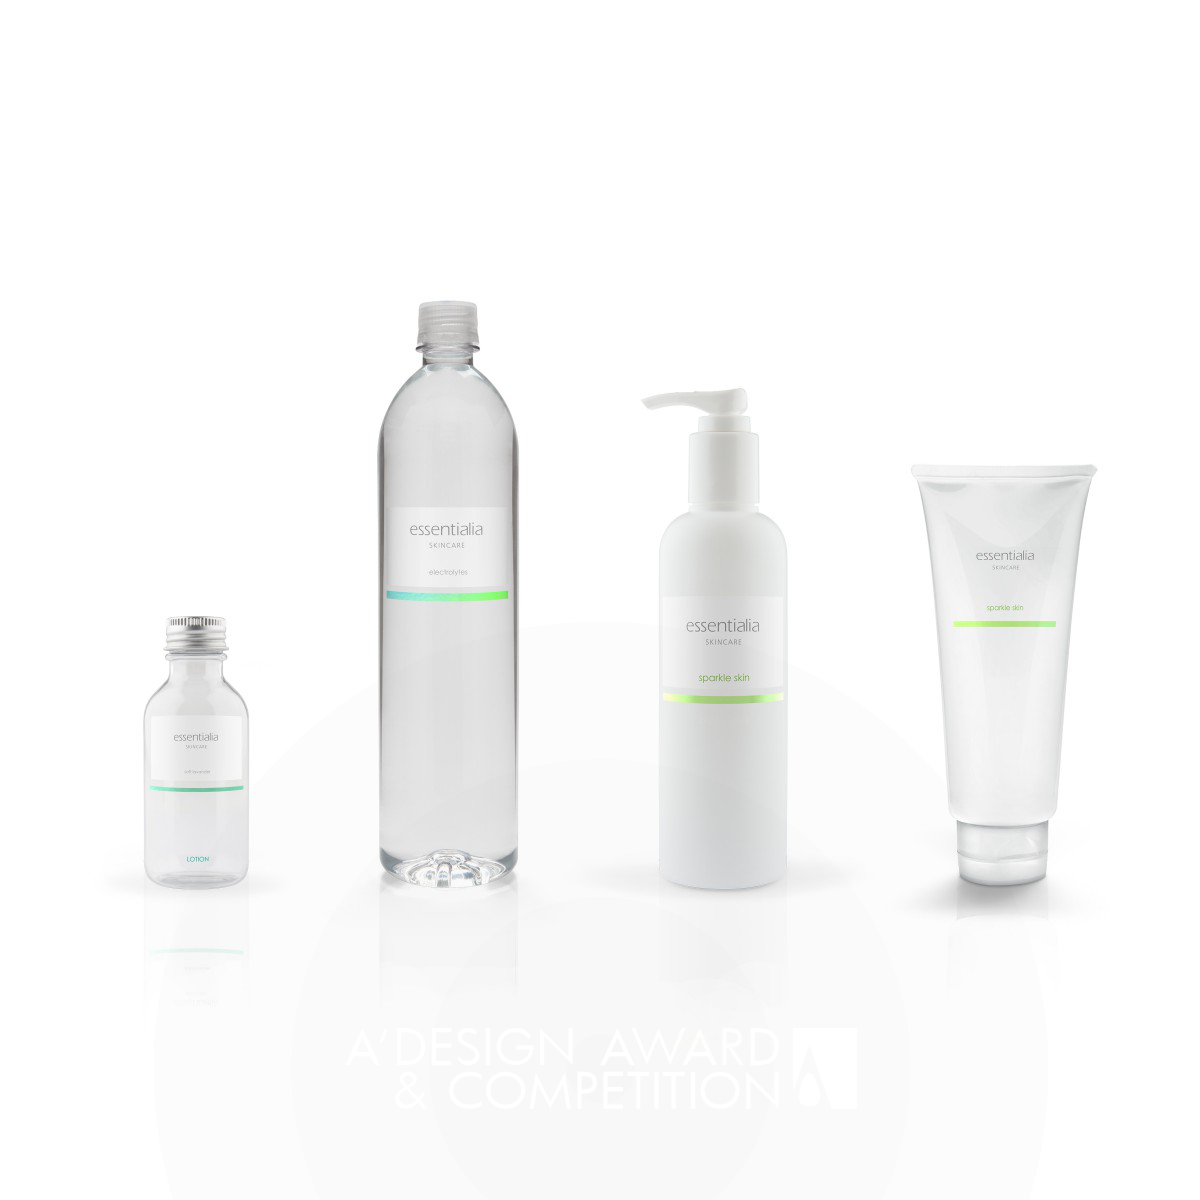 Essentialia Skincare Packaging Design by Paola Diaz Janna